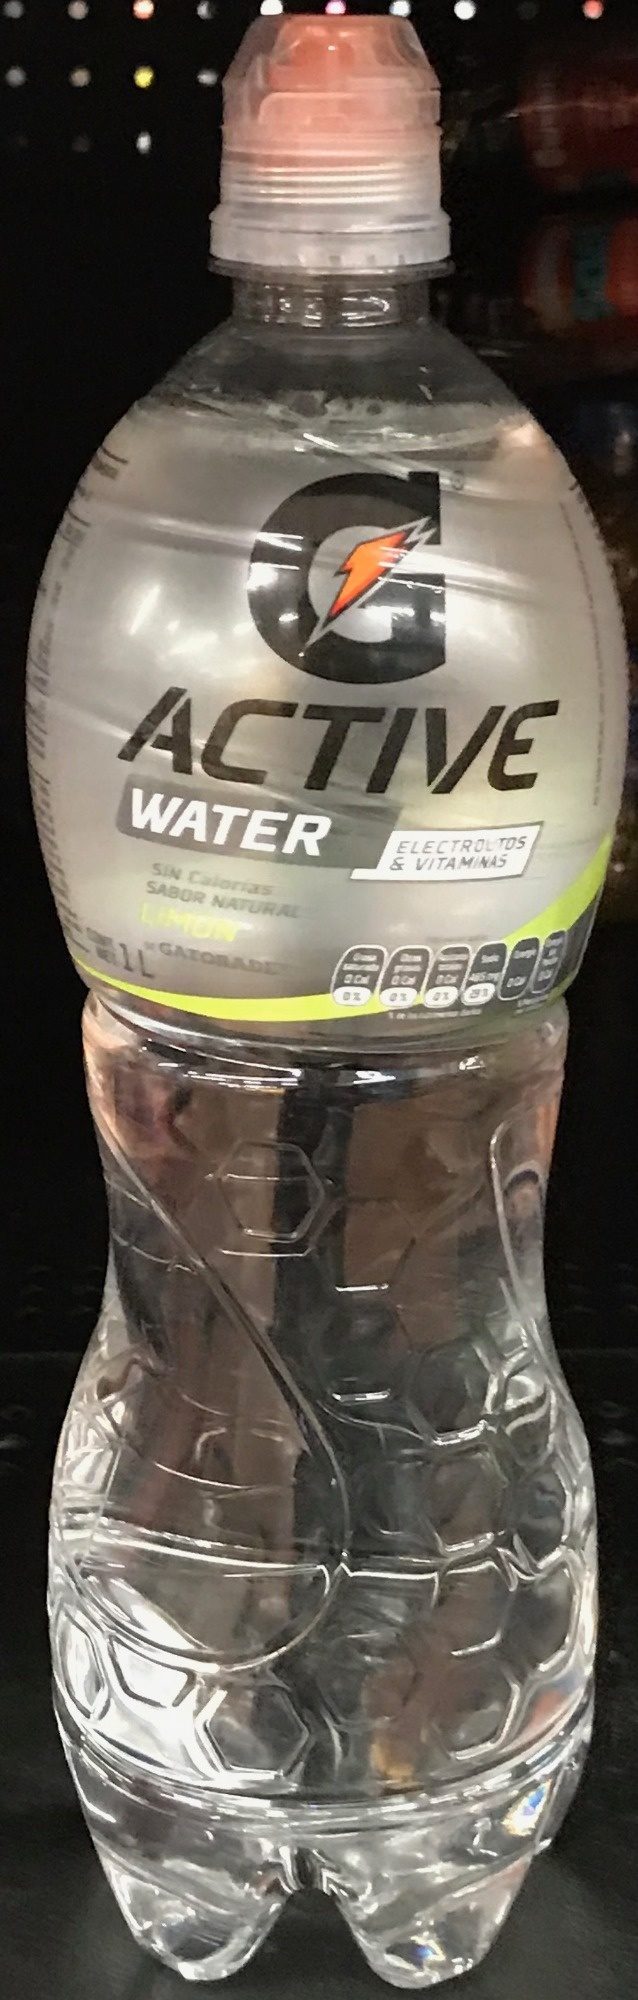 Active Water sabor limón - Producto